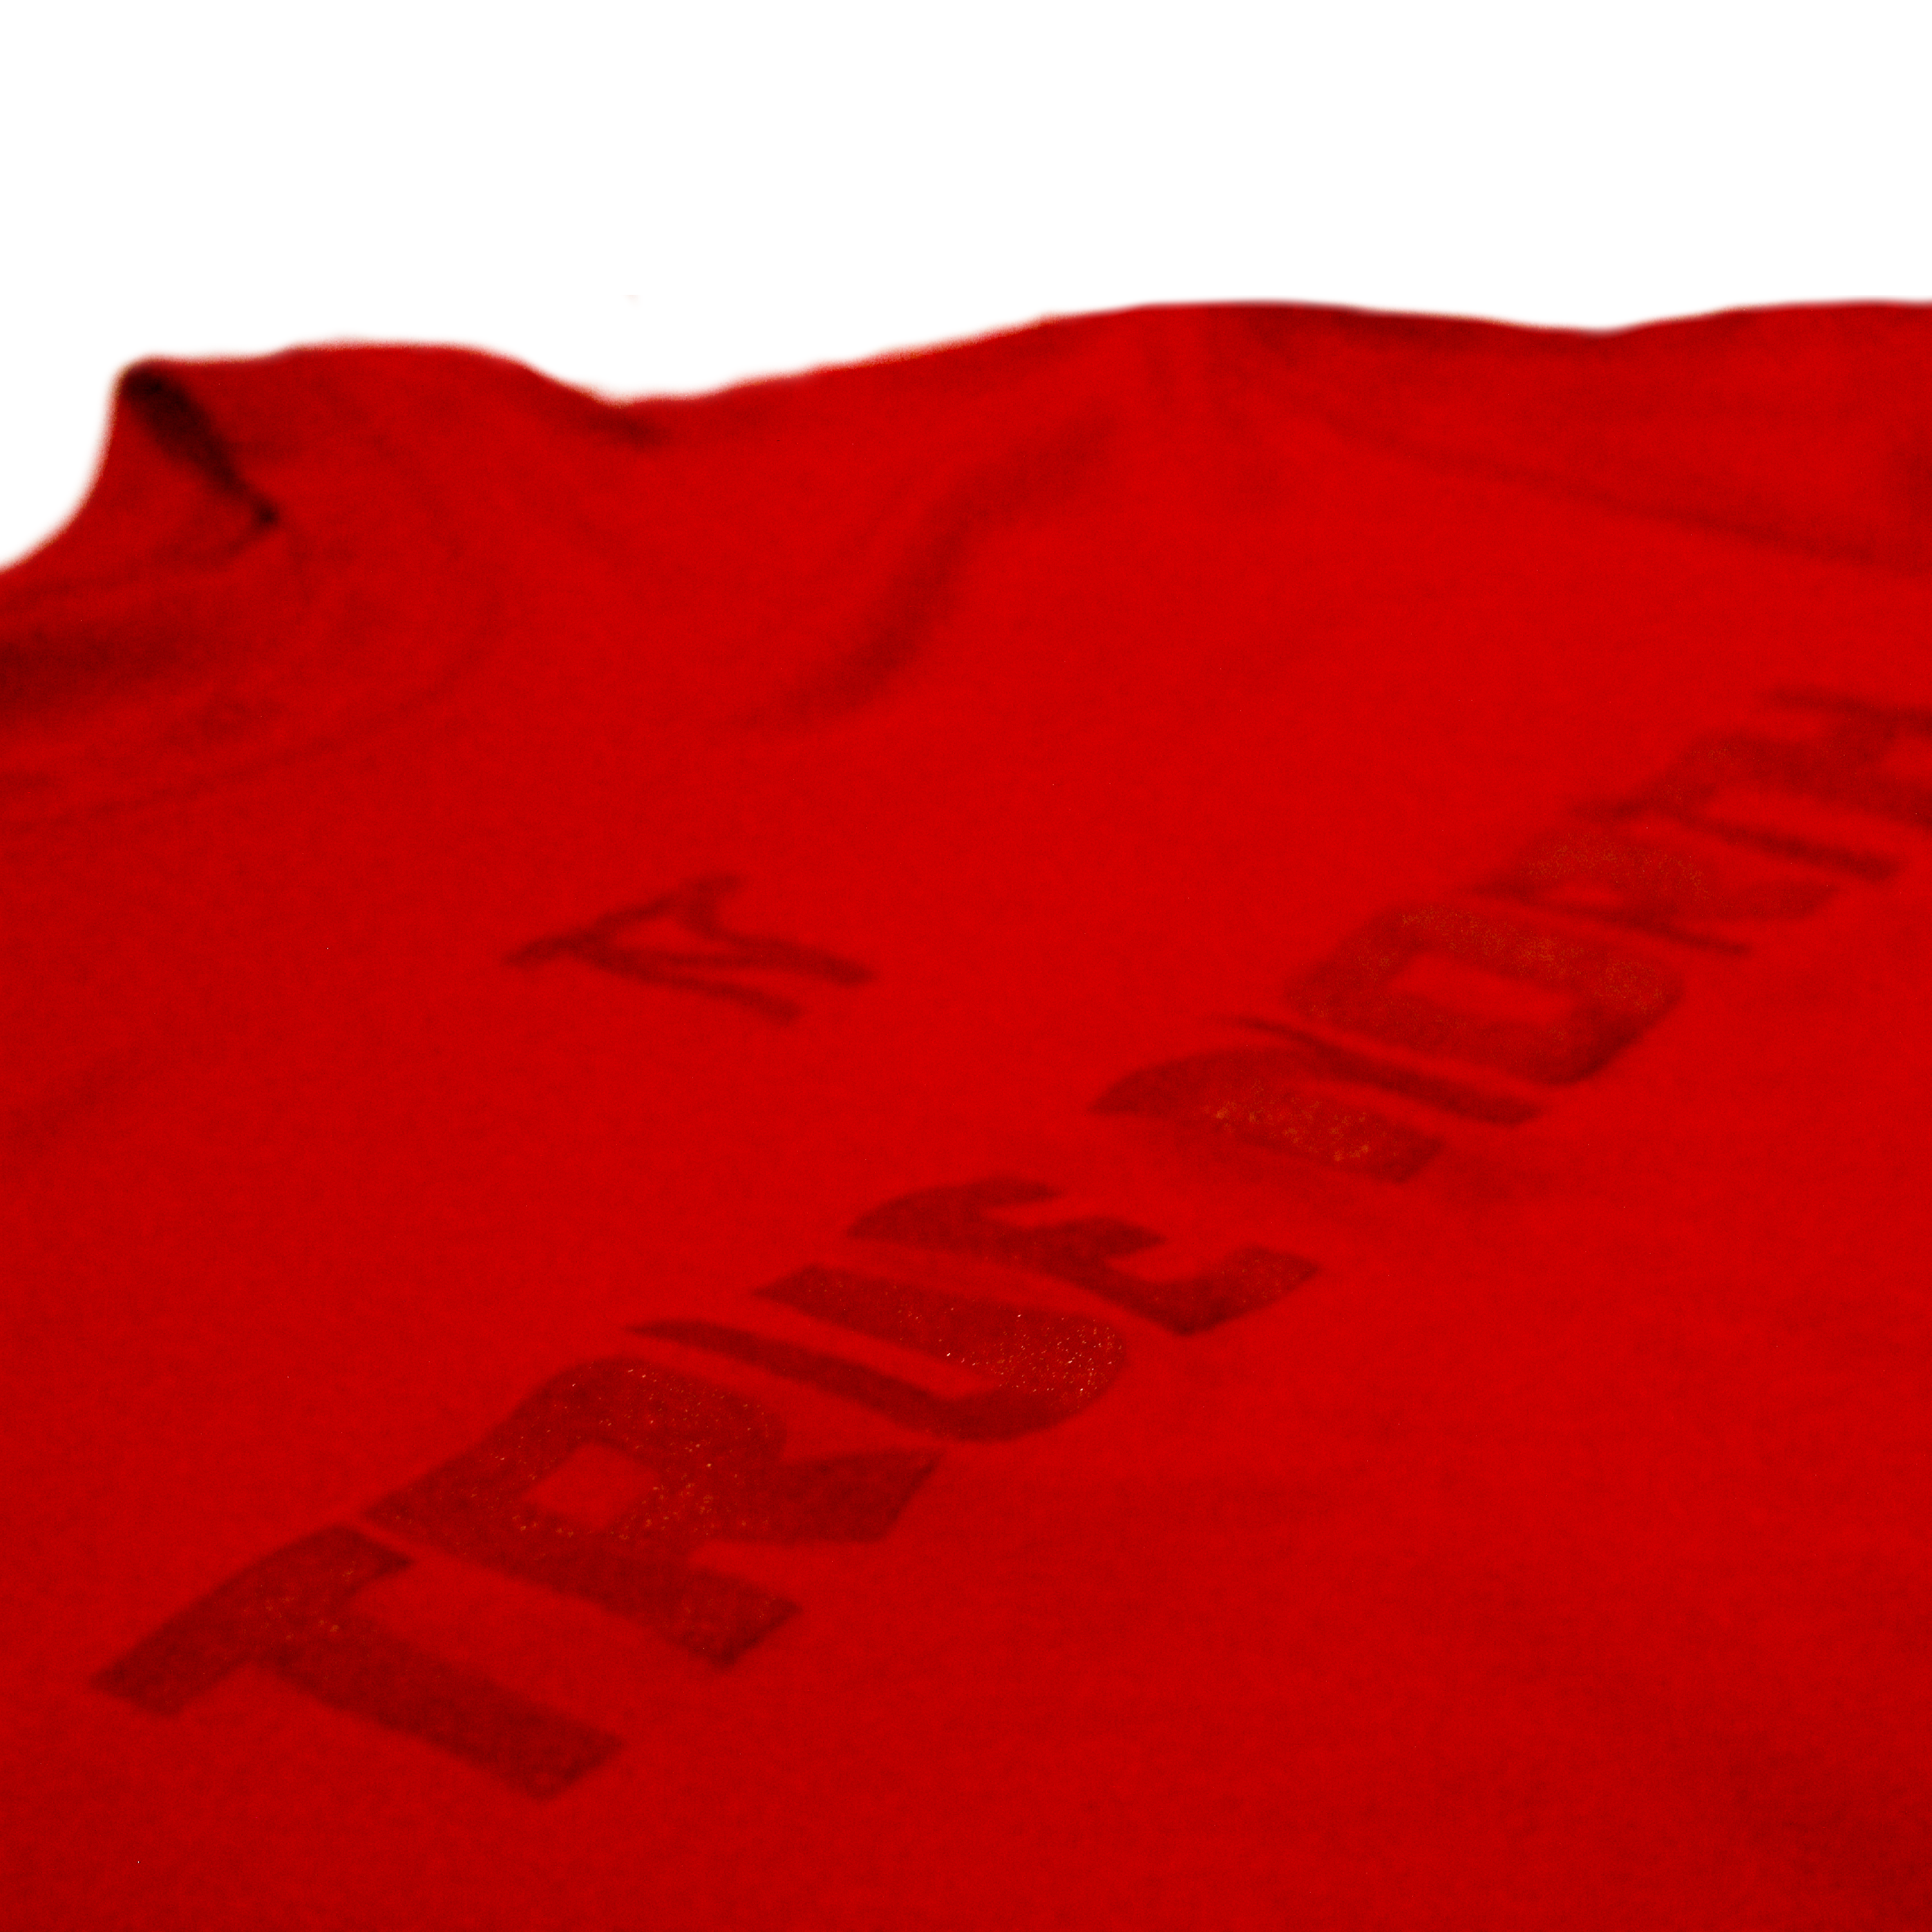 FirstPlacePerormanceT-Shirt2.png